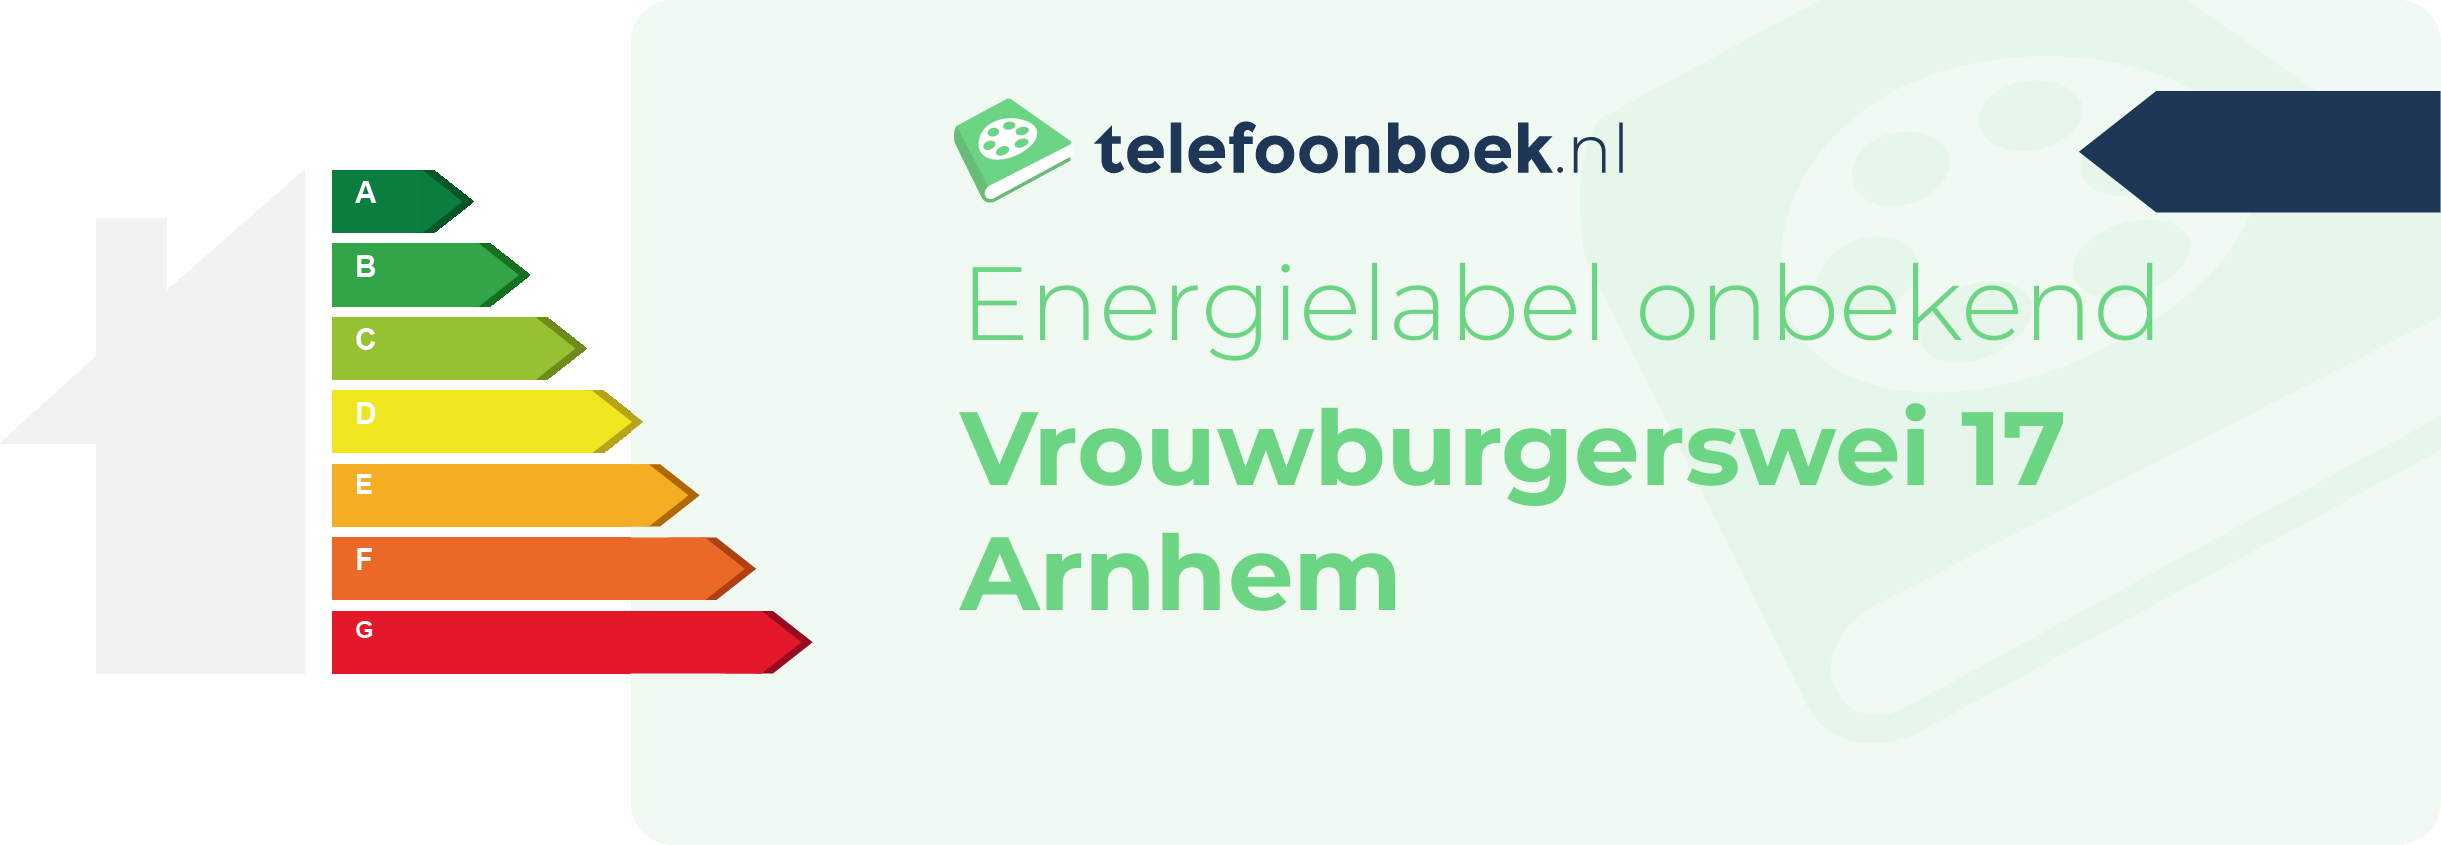 Energielabel Vrouwburgerswei 17 Arnhem